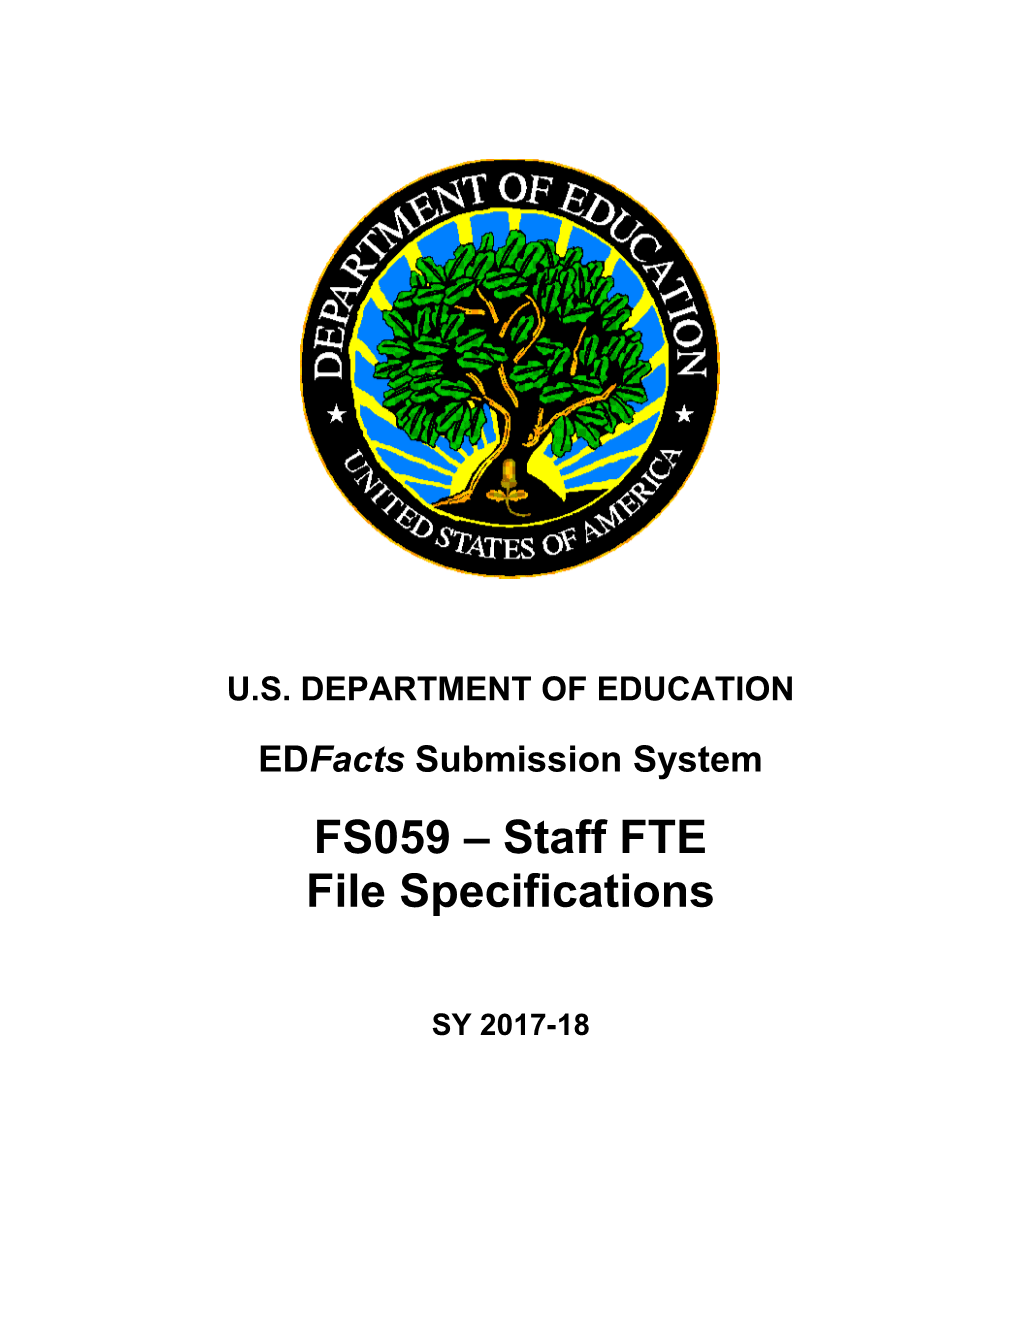 FS059 Staff FTE File Specifications (Msword)